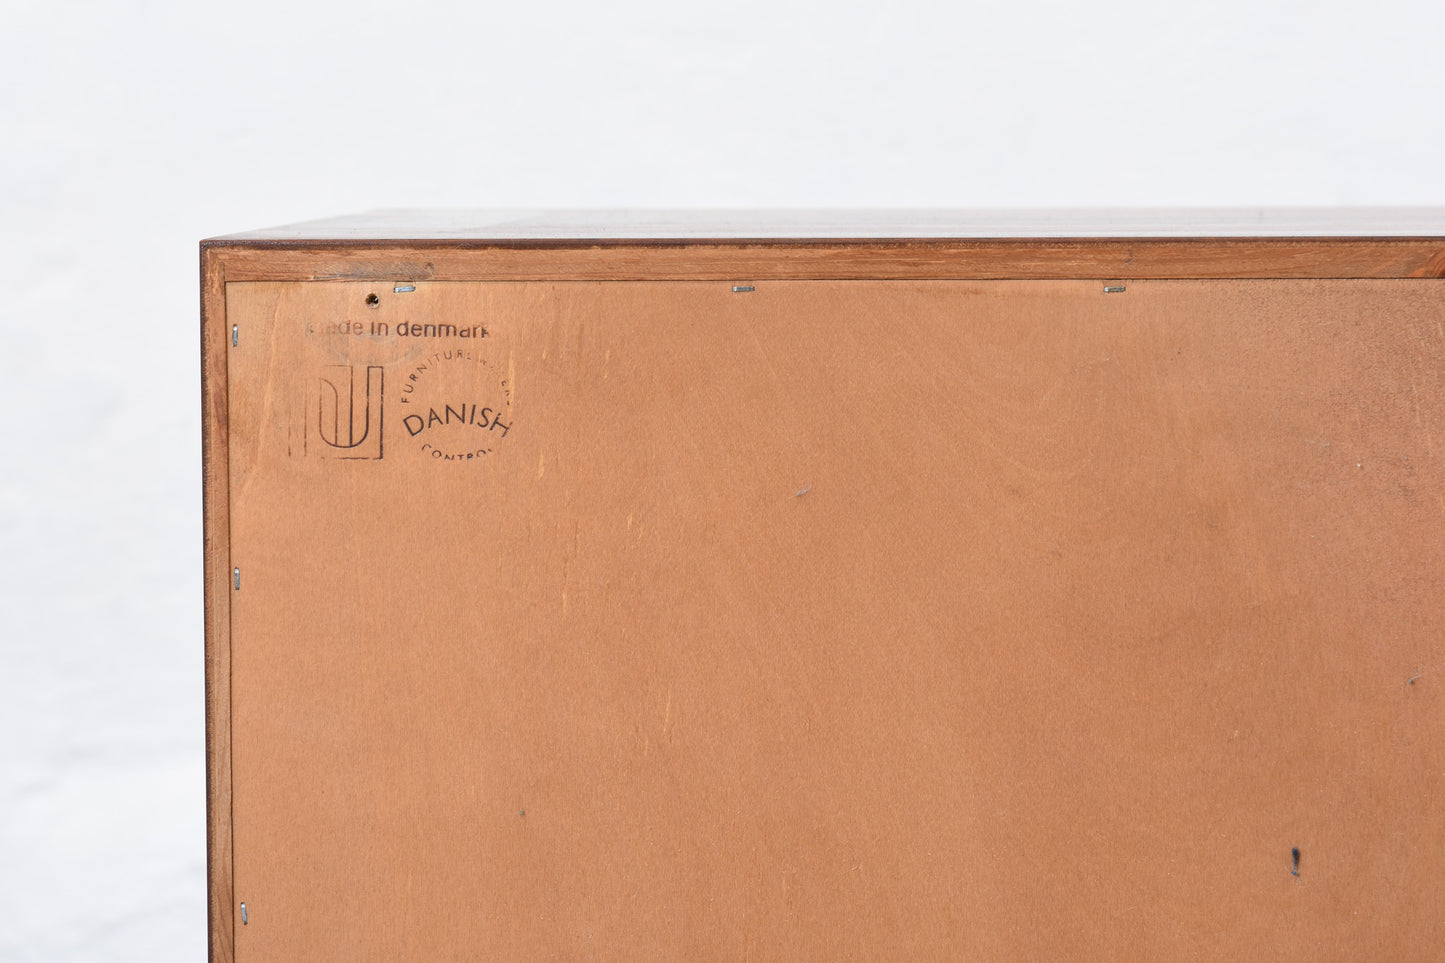 1960s rosewood sideboard by Carlo Jensen - 108L cm